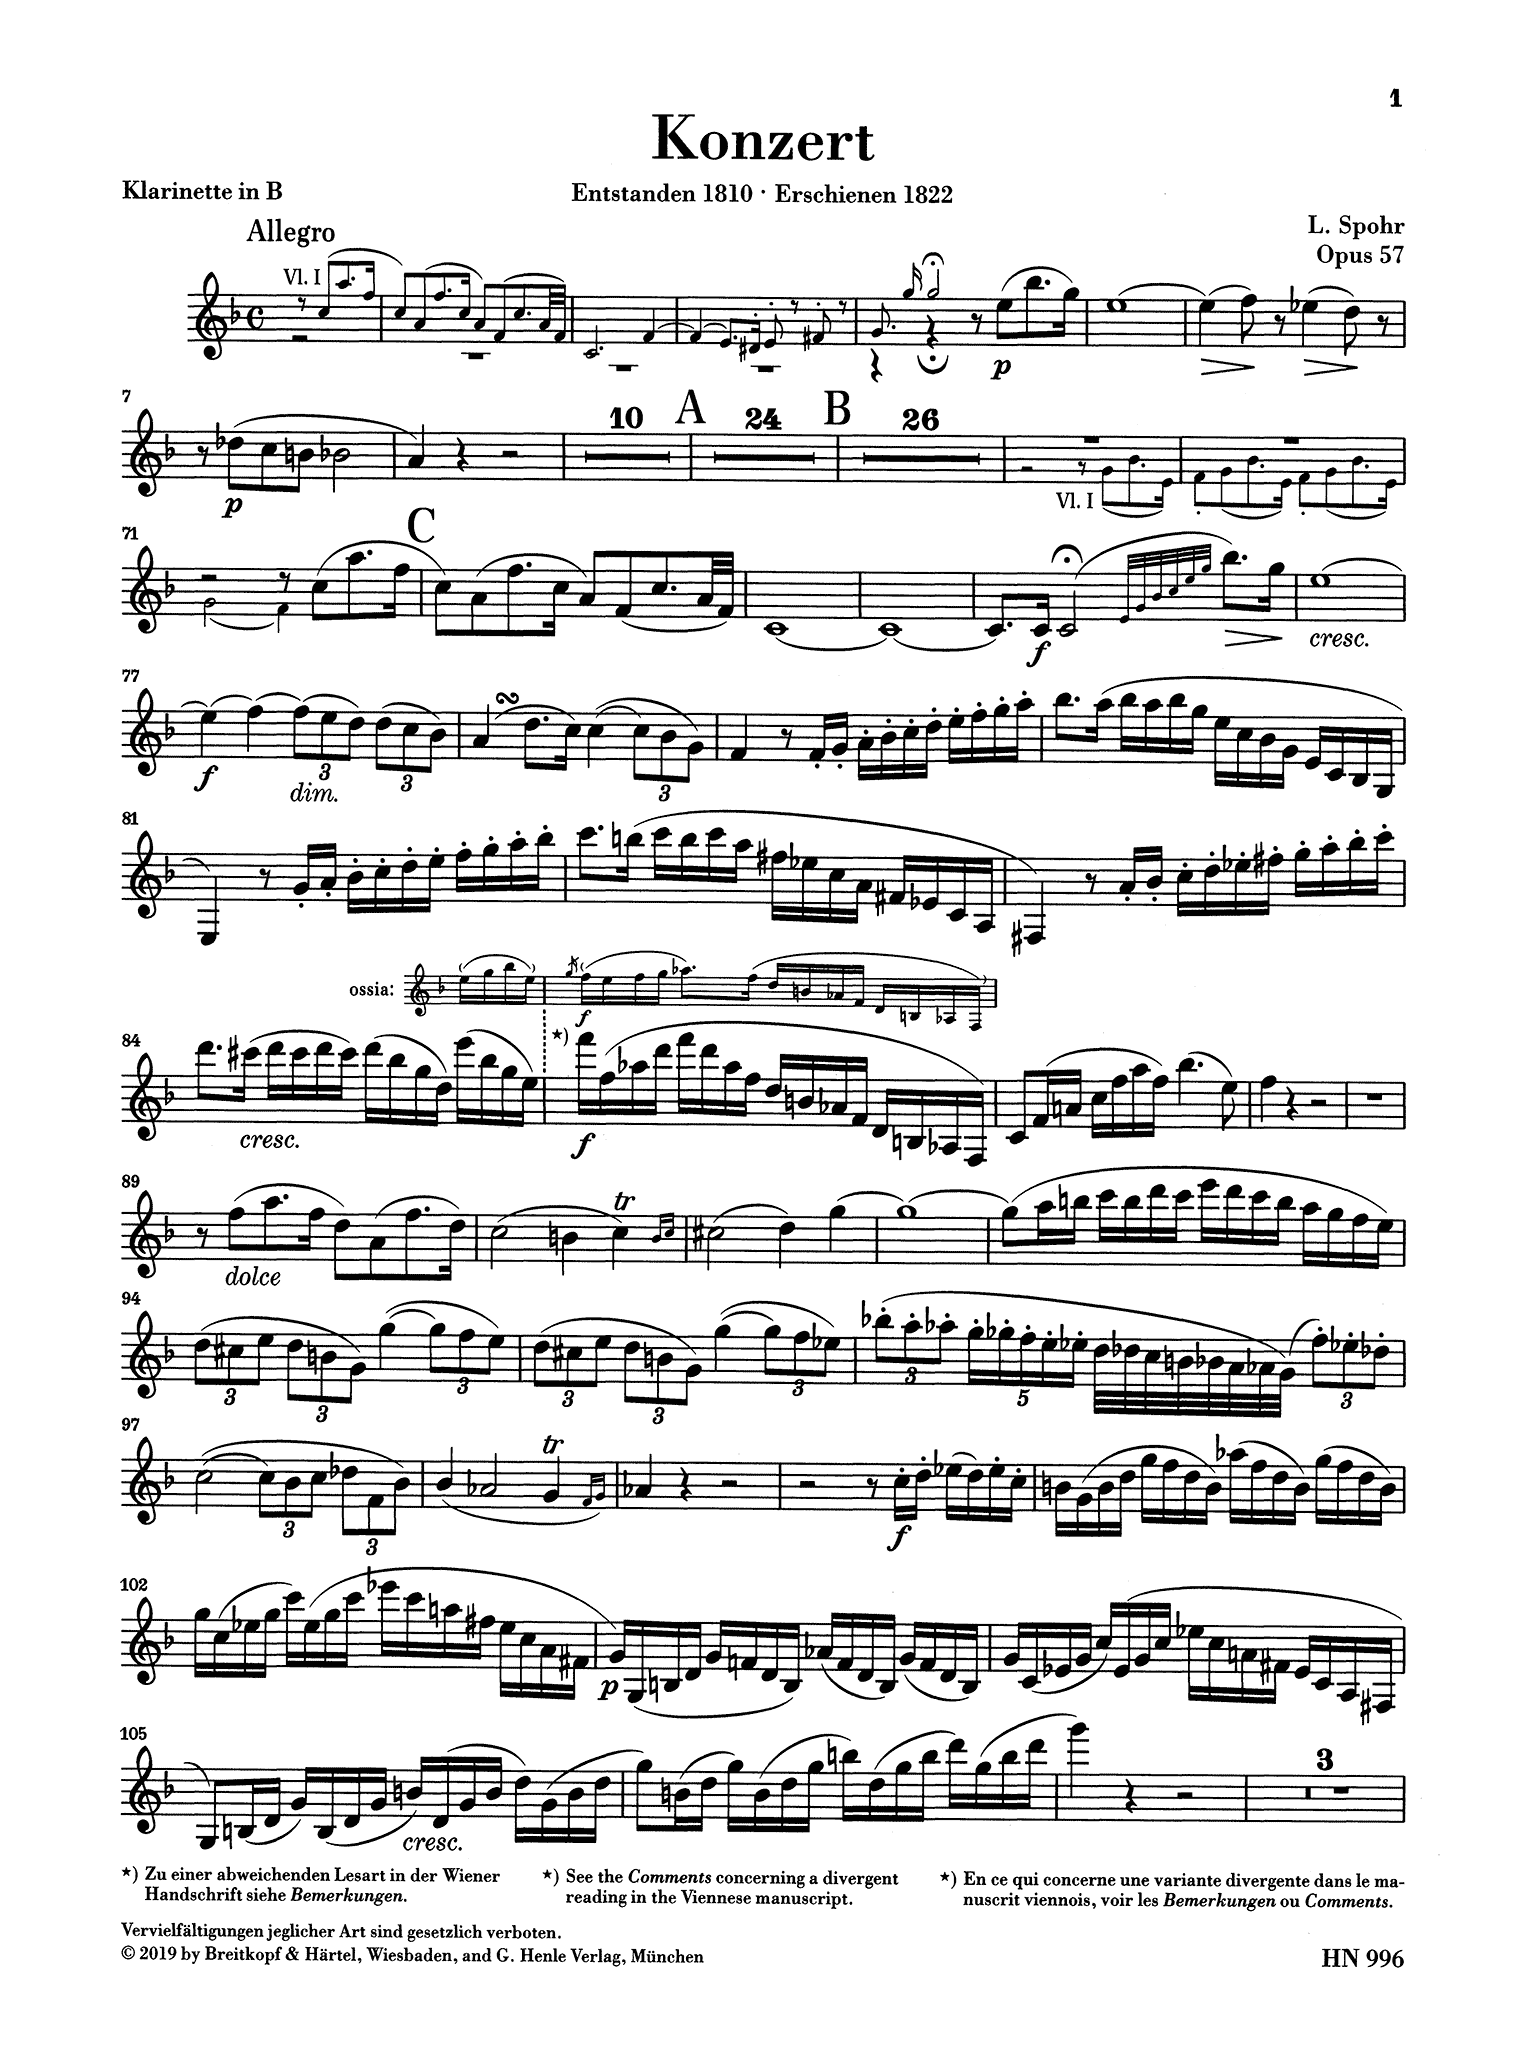 Clarinet Concerto No. 2 in E-flat Major, Op. 57 Clarinet part